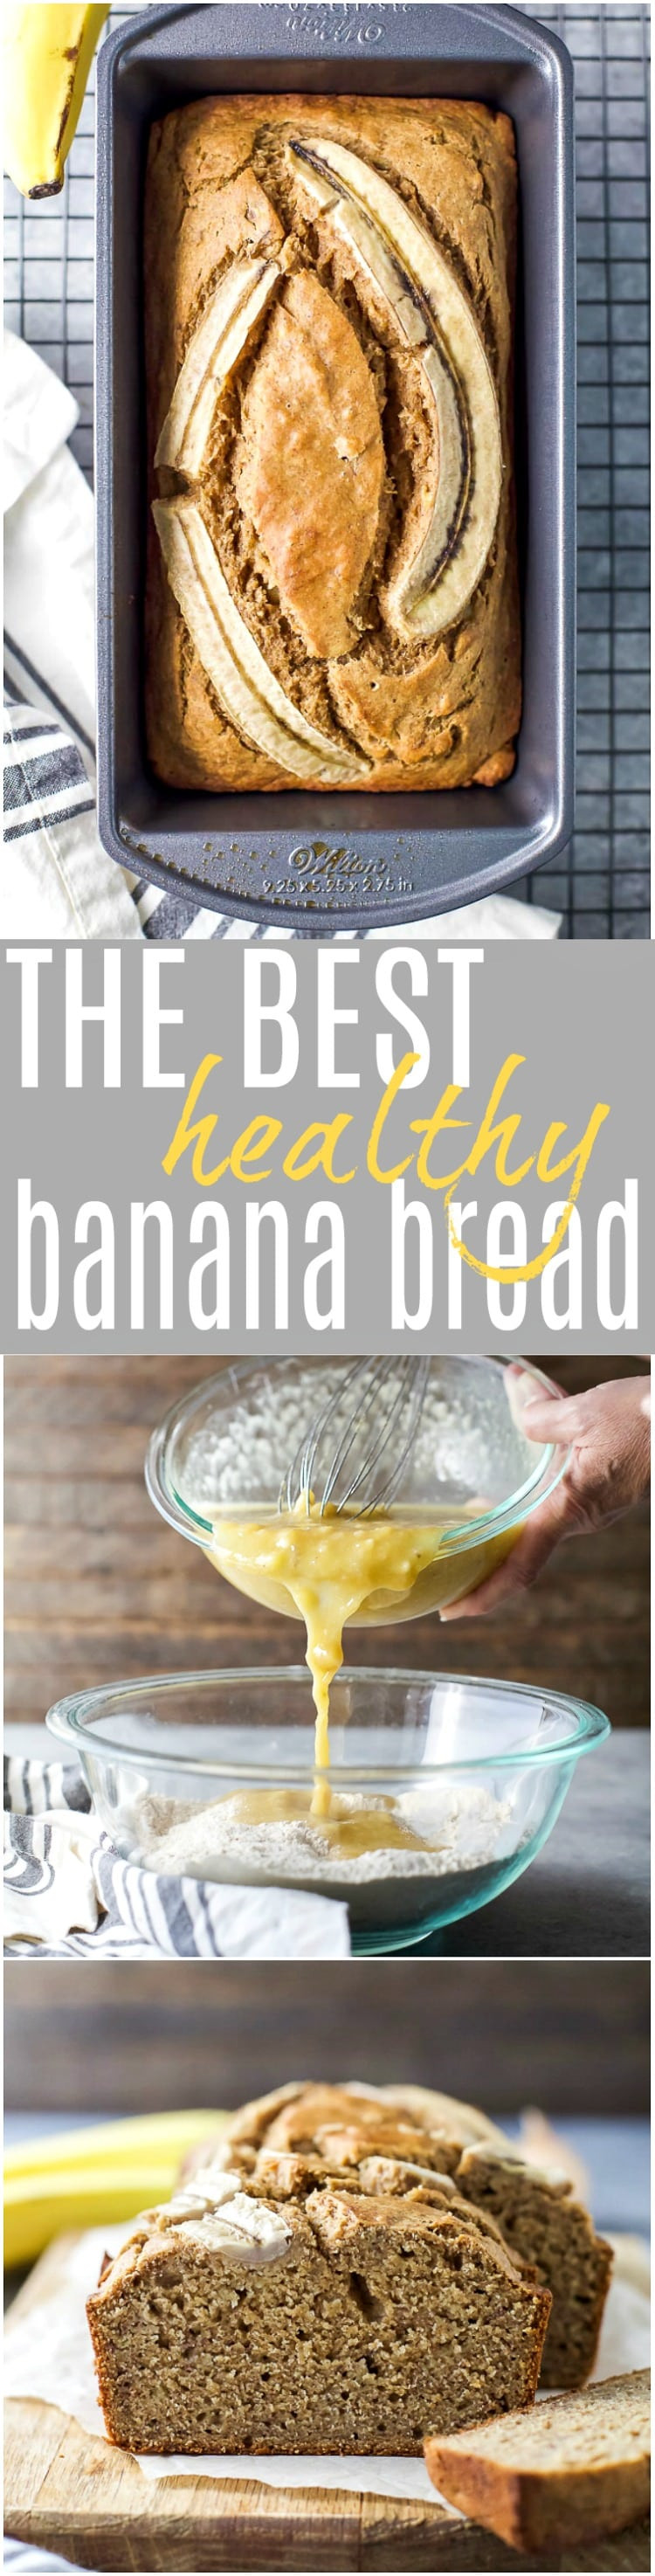 Best Healthy Banana Bread Recipe
 The BEST Healthy Banana Bread Recipe